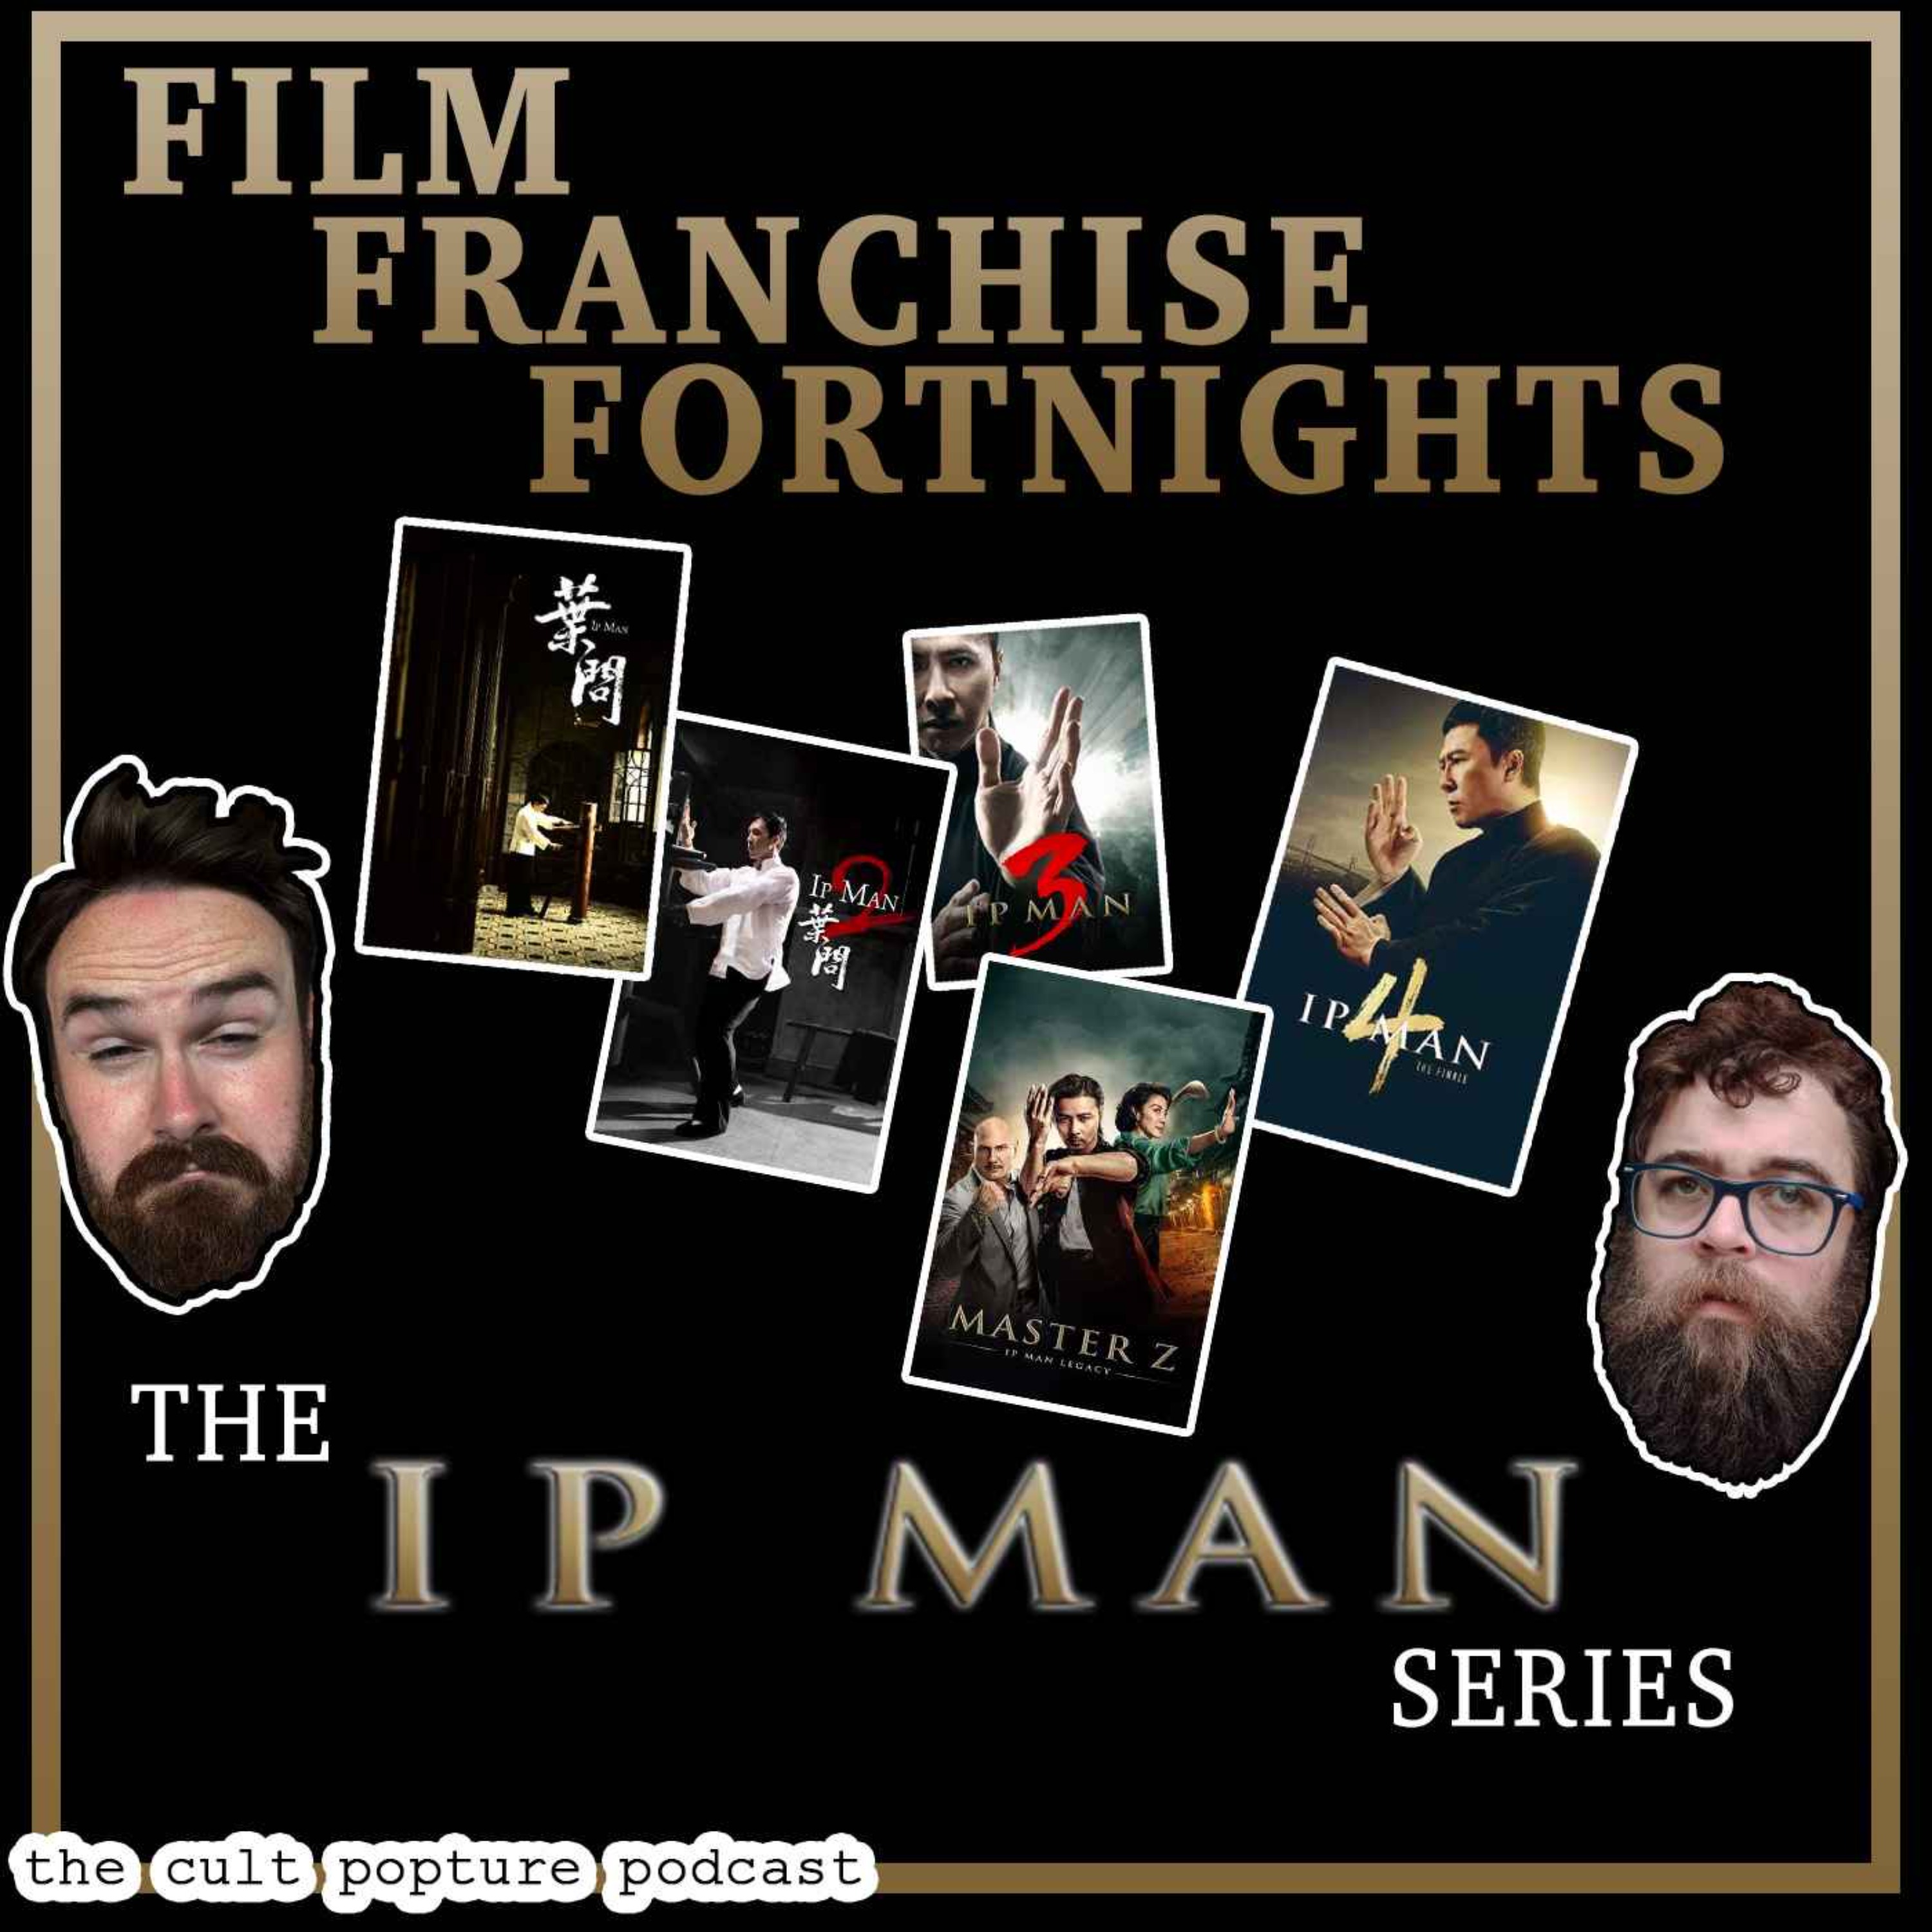 The ”Ip Man” Series | Film Franchise Fortnights